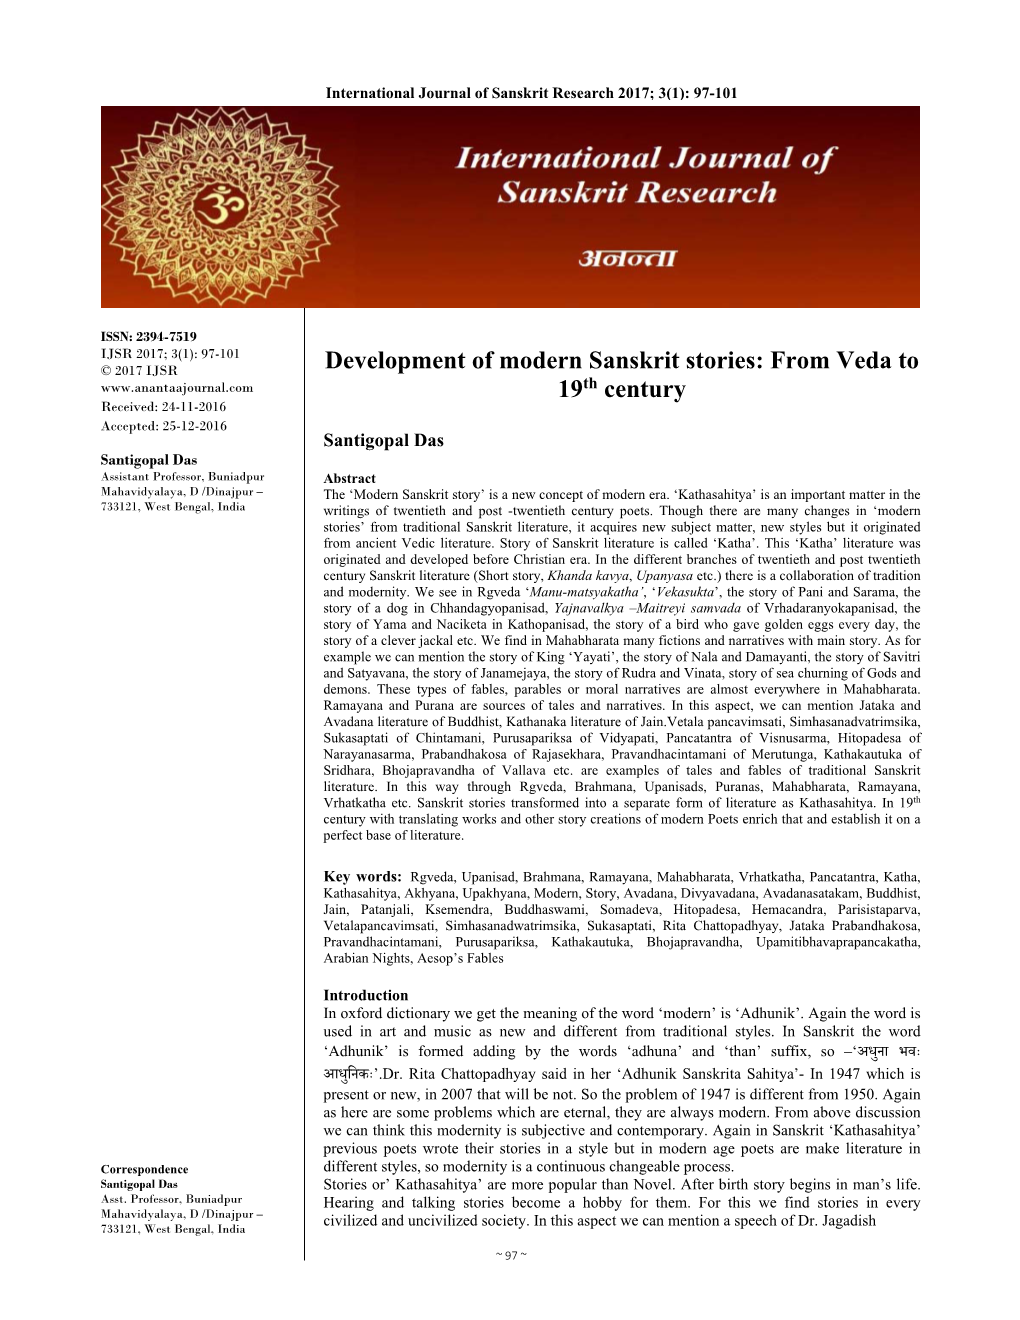 Development of Modern Sanskrit Stories: from Veda to 19Th Century